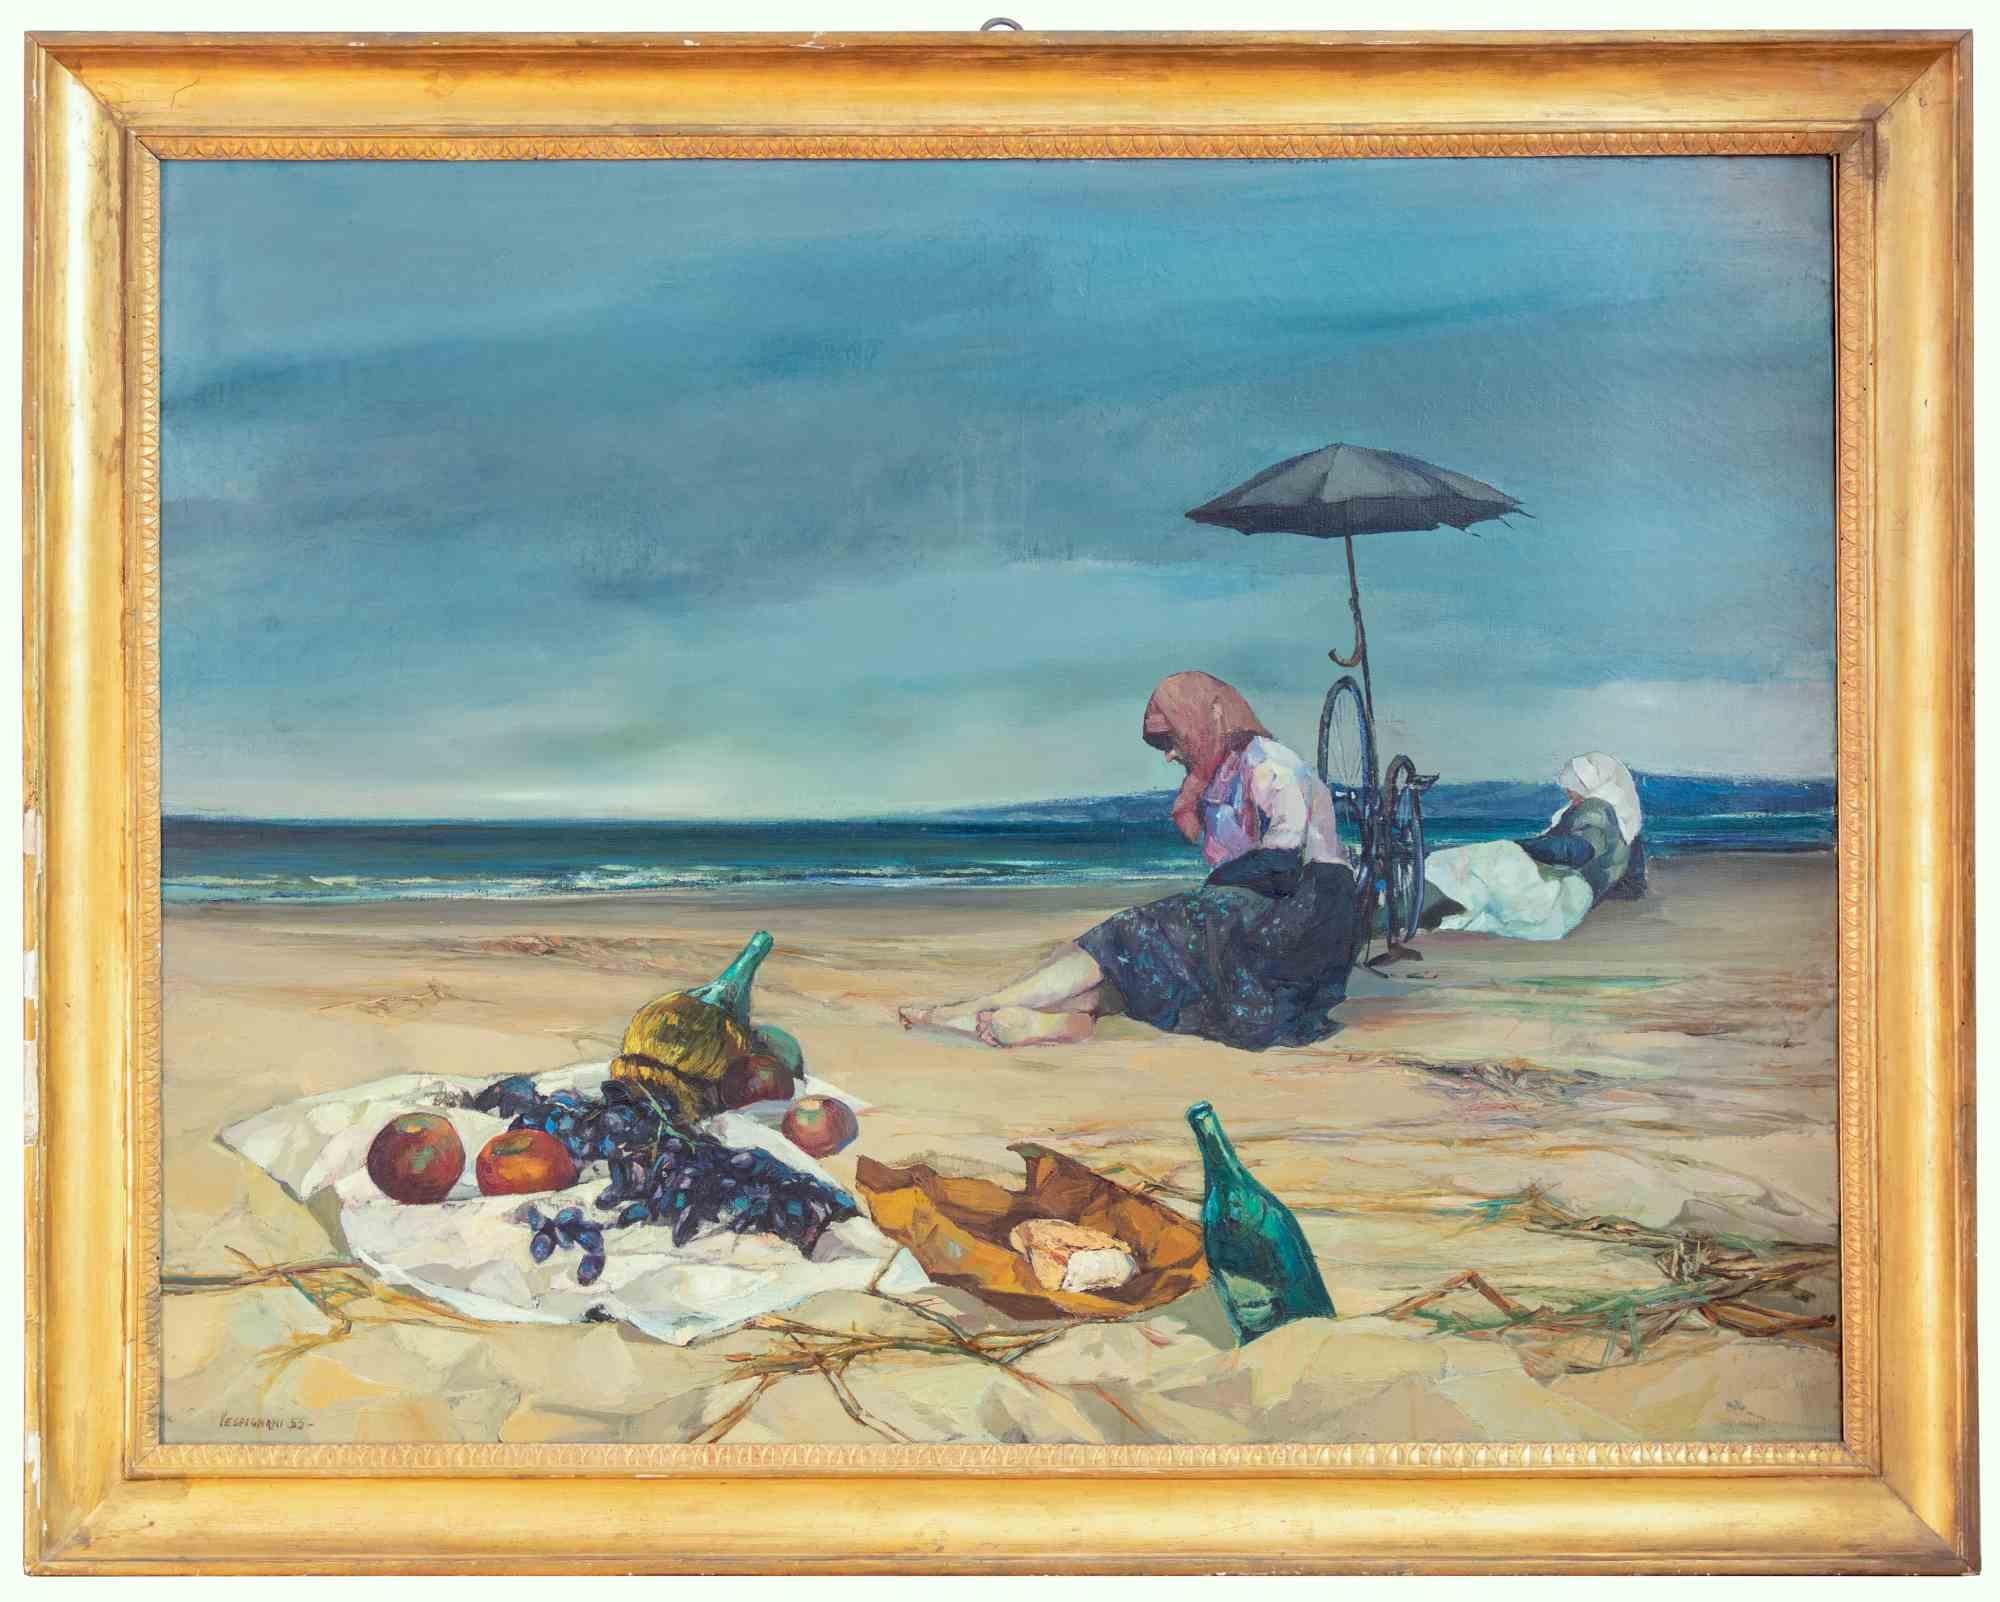 On the Beach - Oil Paint by Renzo Vespignani - 1955